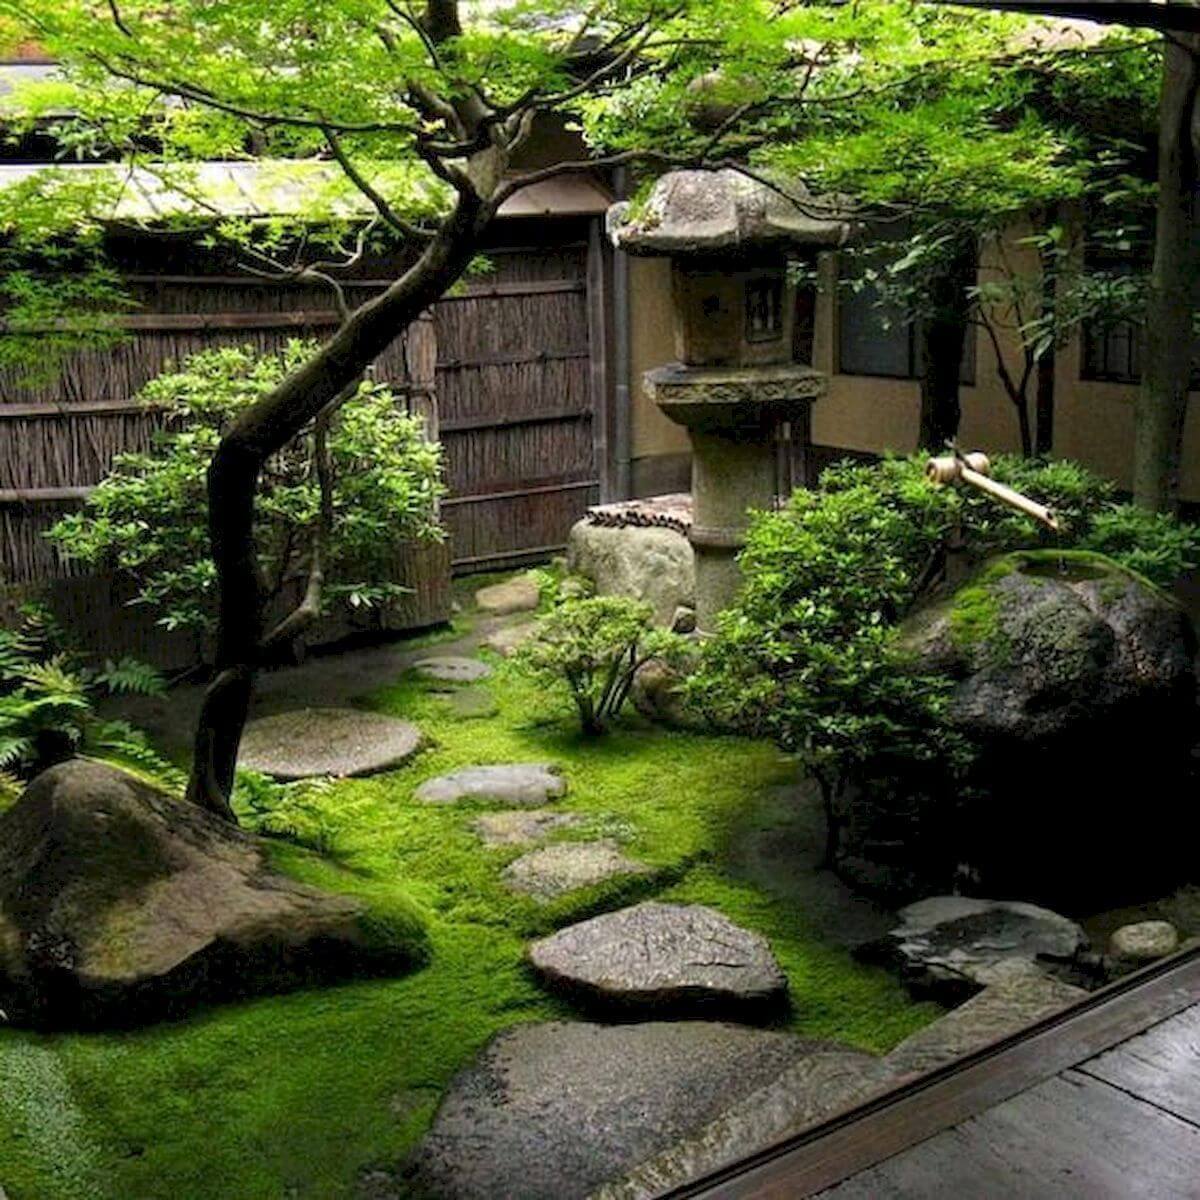 6- Japanese garden